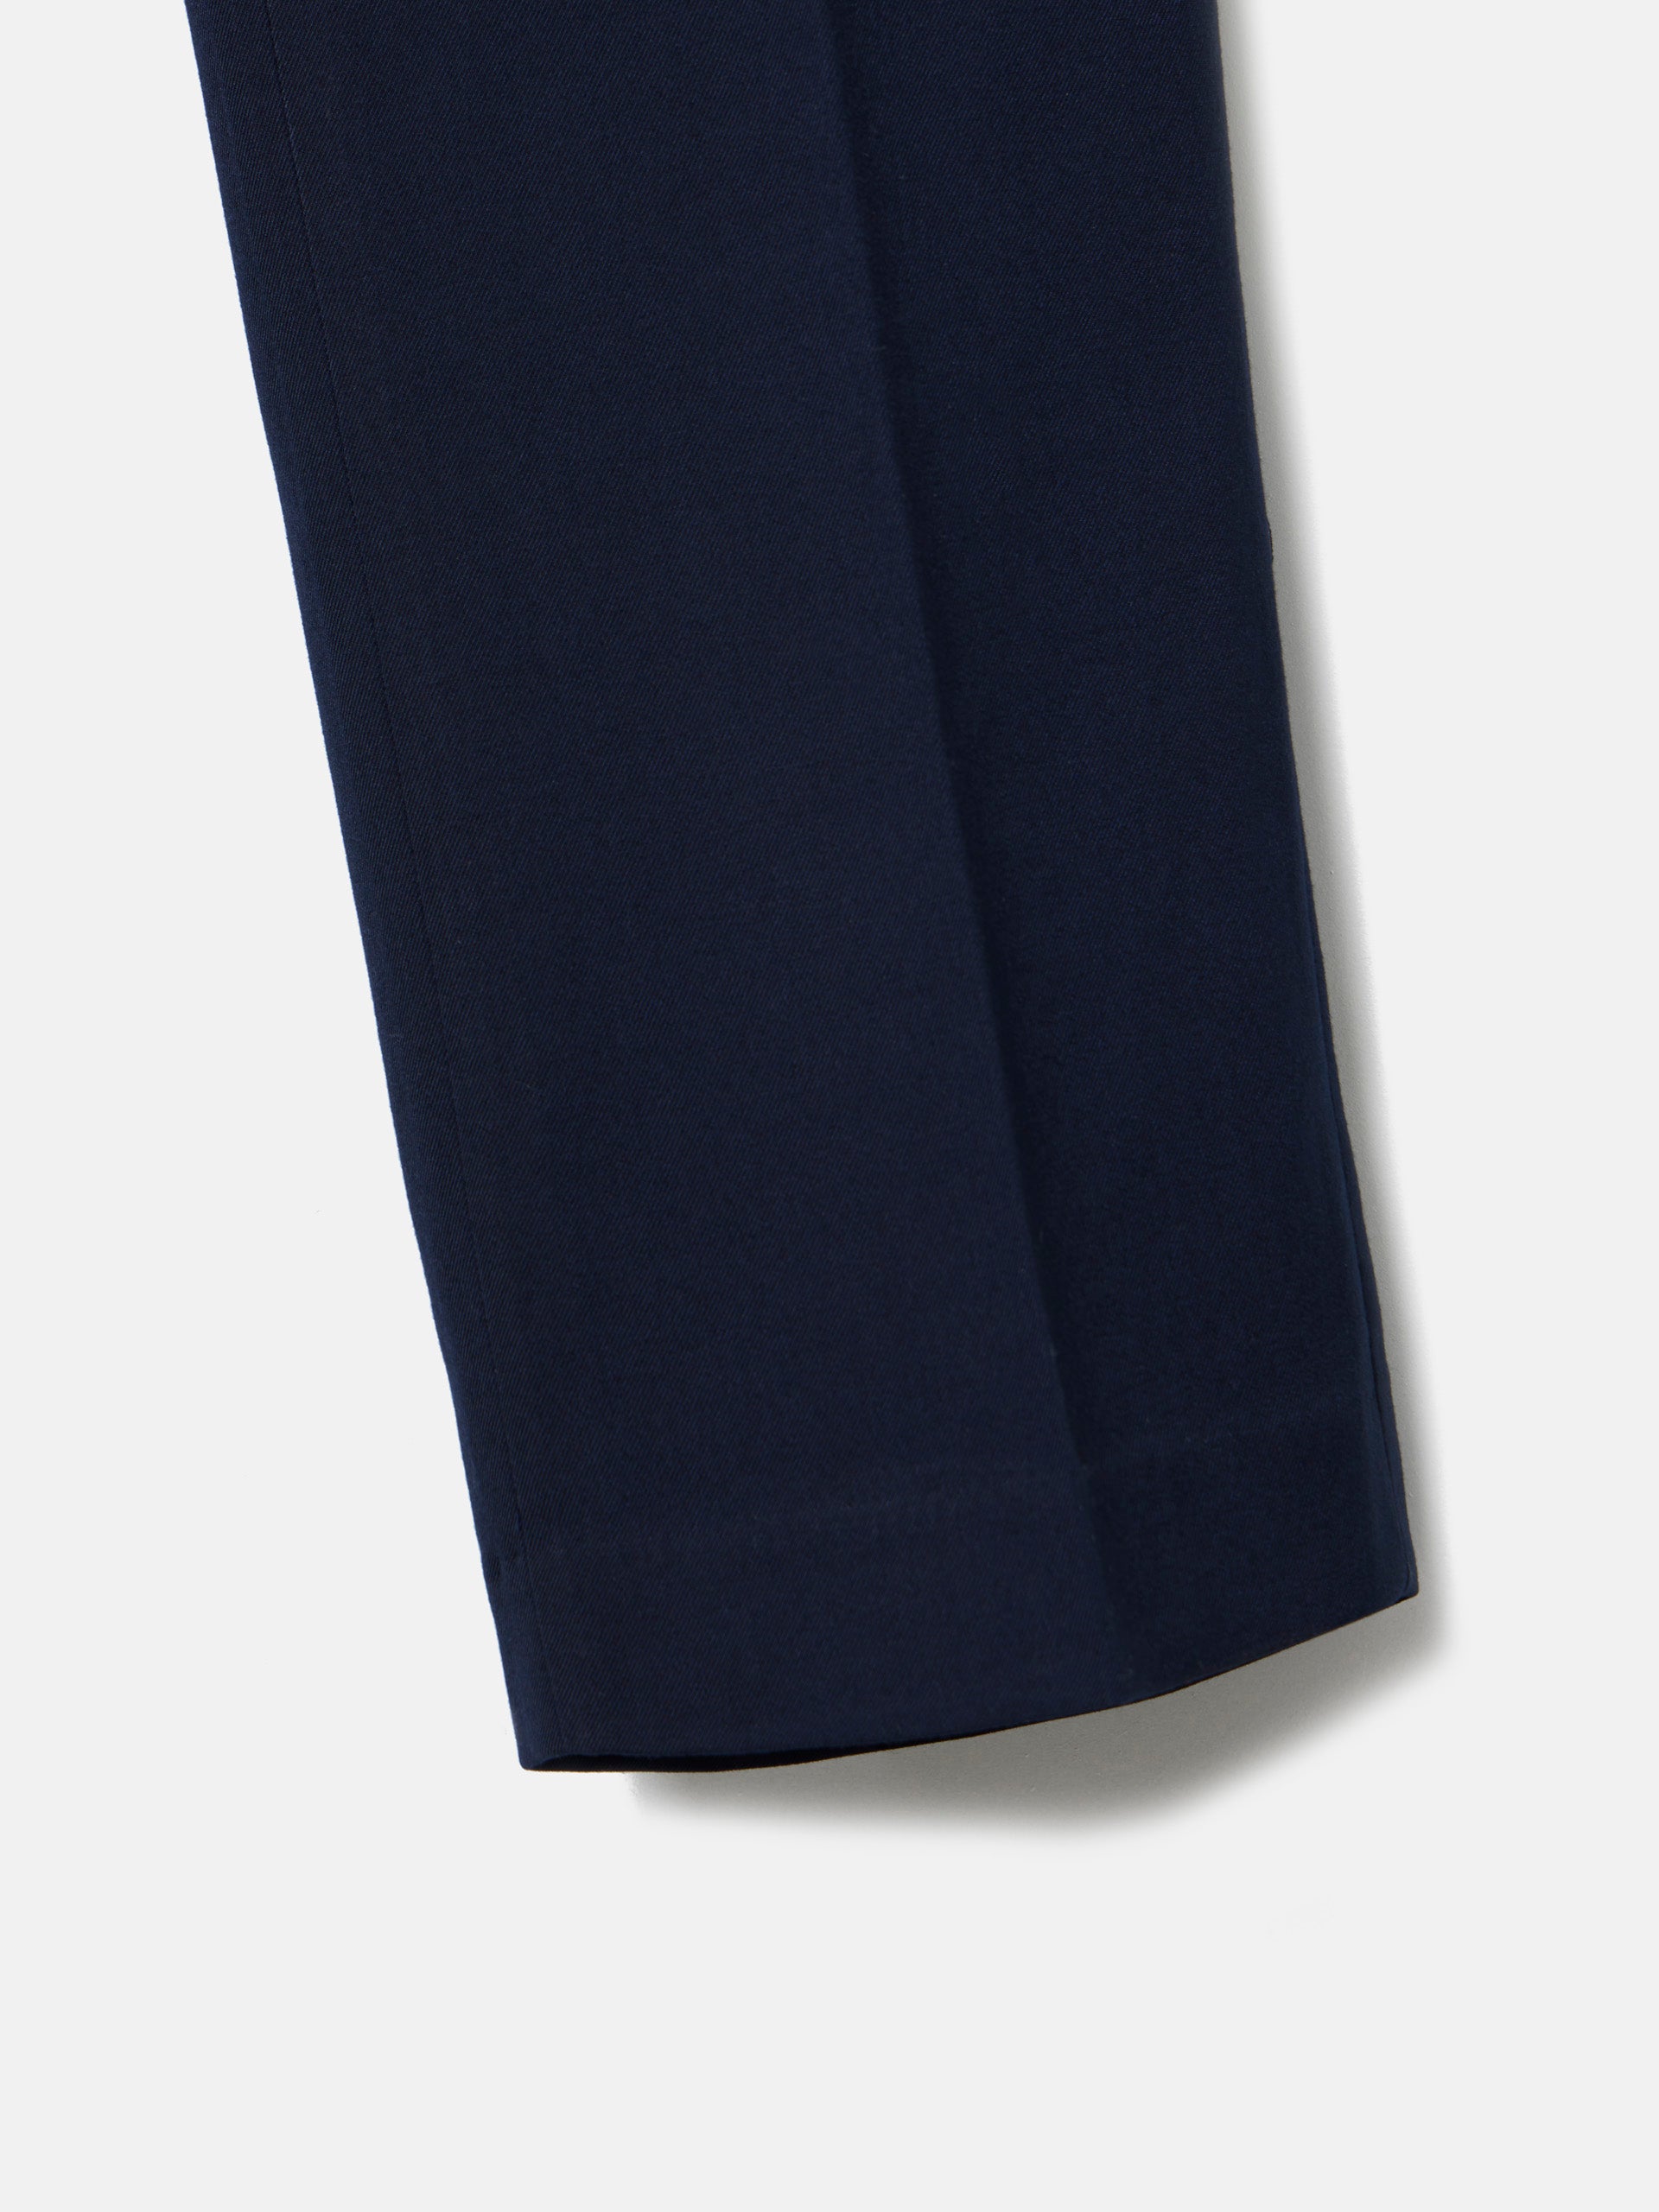 Pantalon traje essential azul marino